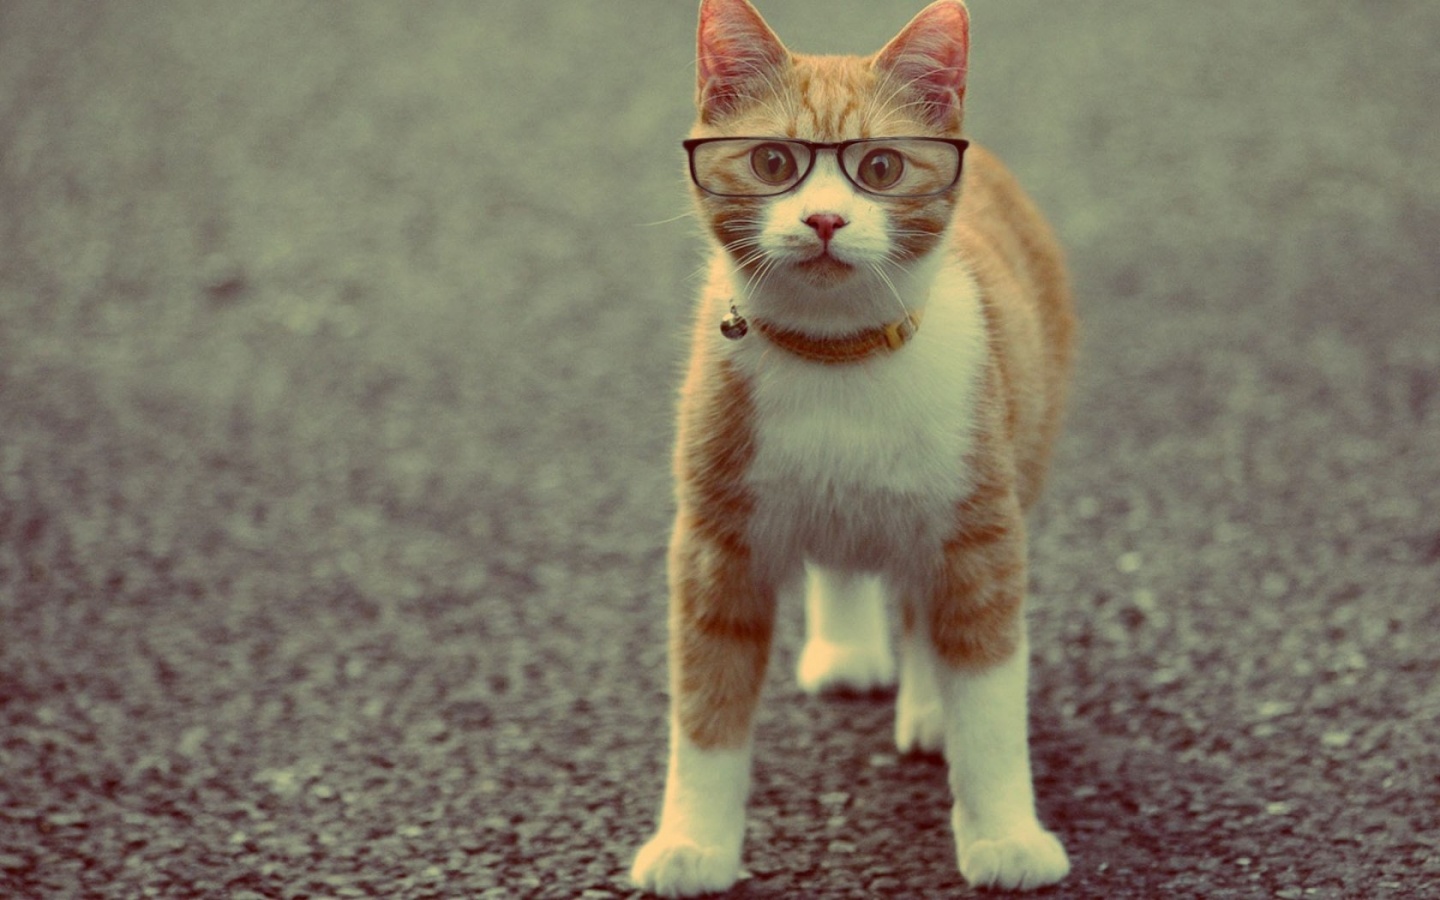 Cat Wearing Glasses Desktop Wallpaper And Stock Photos